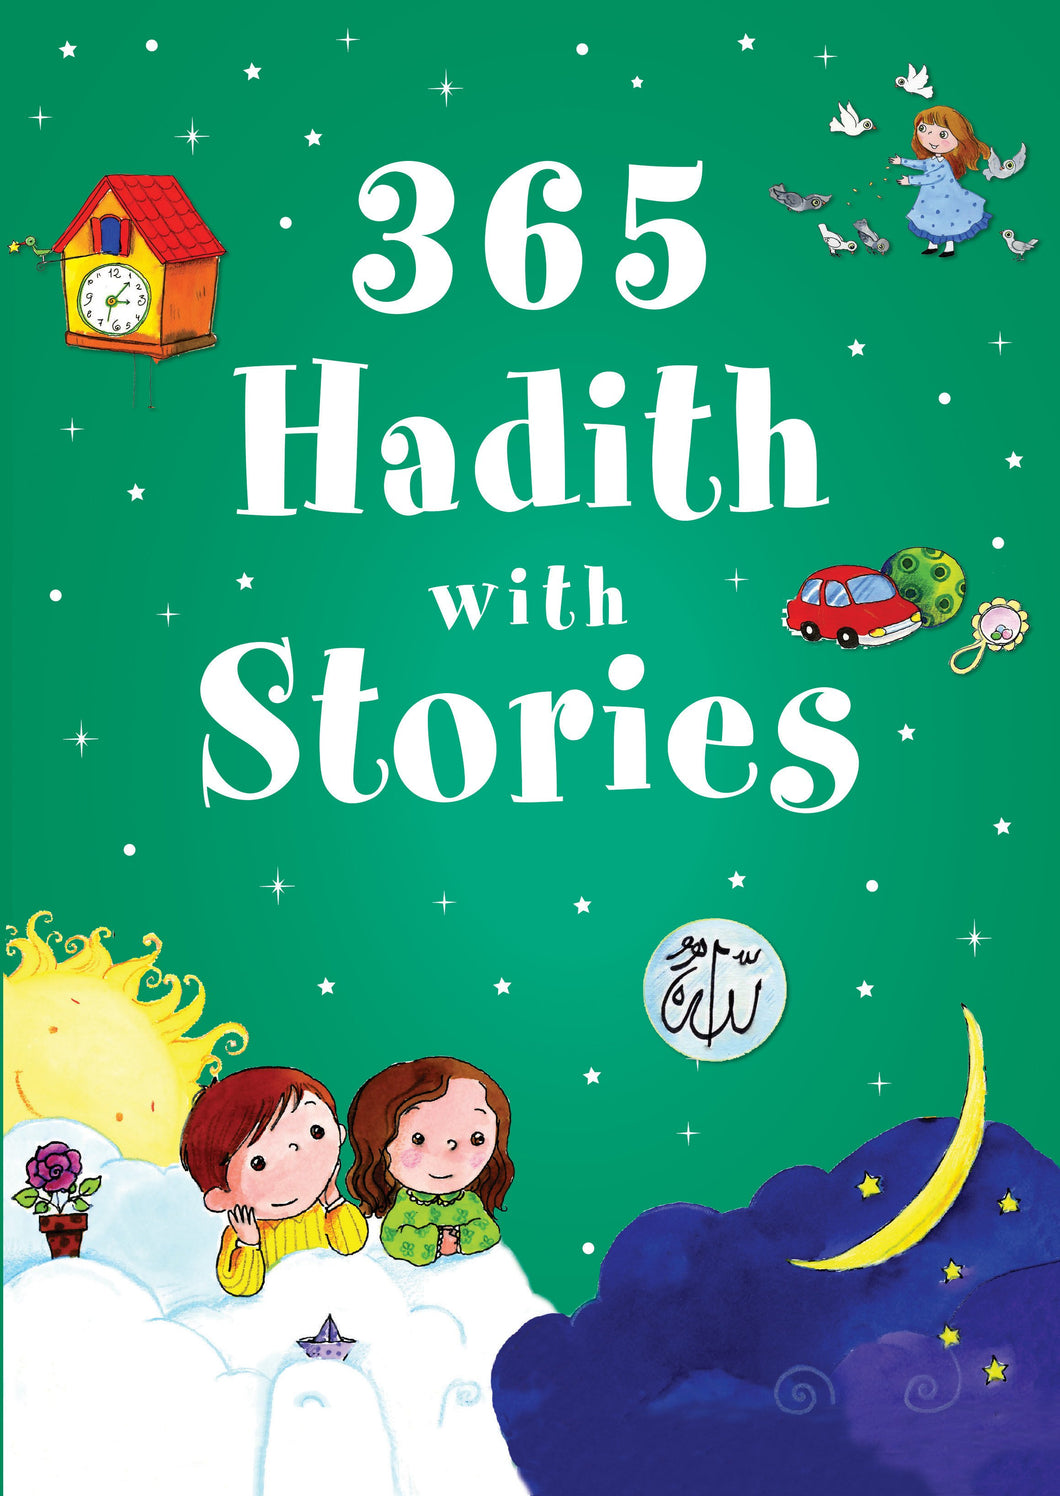 365 Hadith with Stories (Hardback)